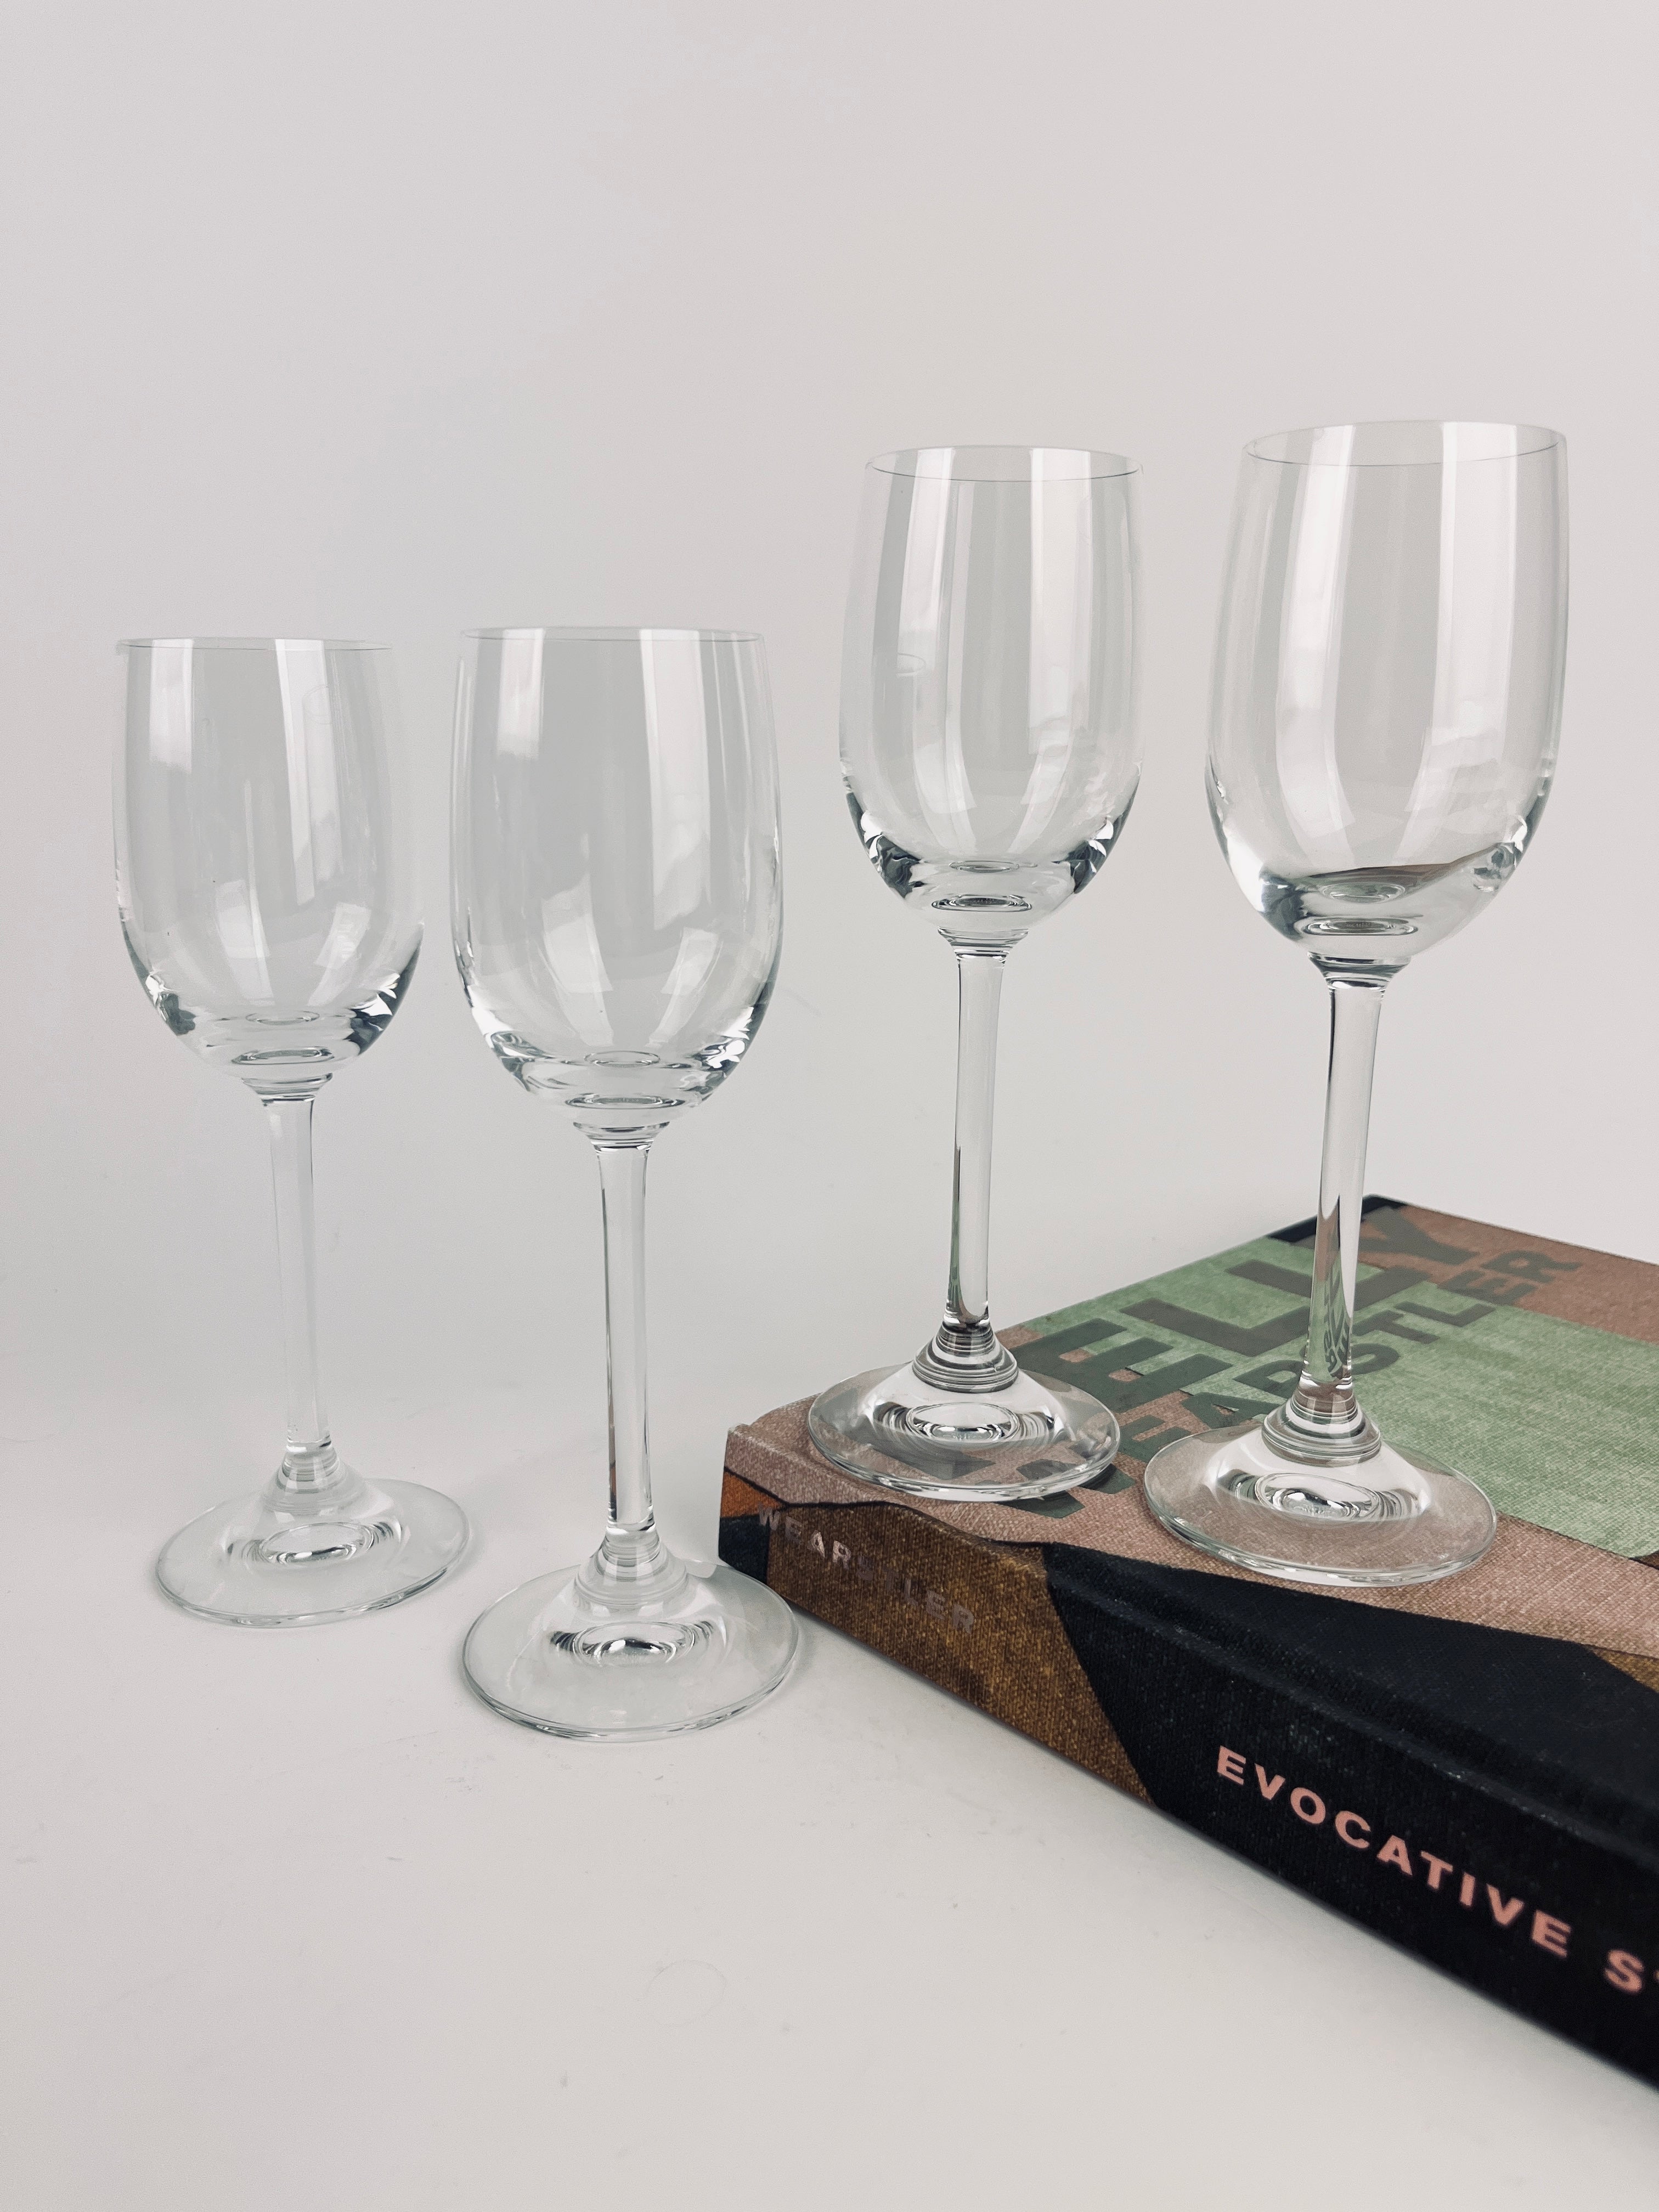 LongchampsMid-Century Modern Rocks Glasses Gift Box Set of 2